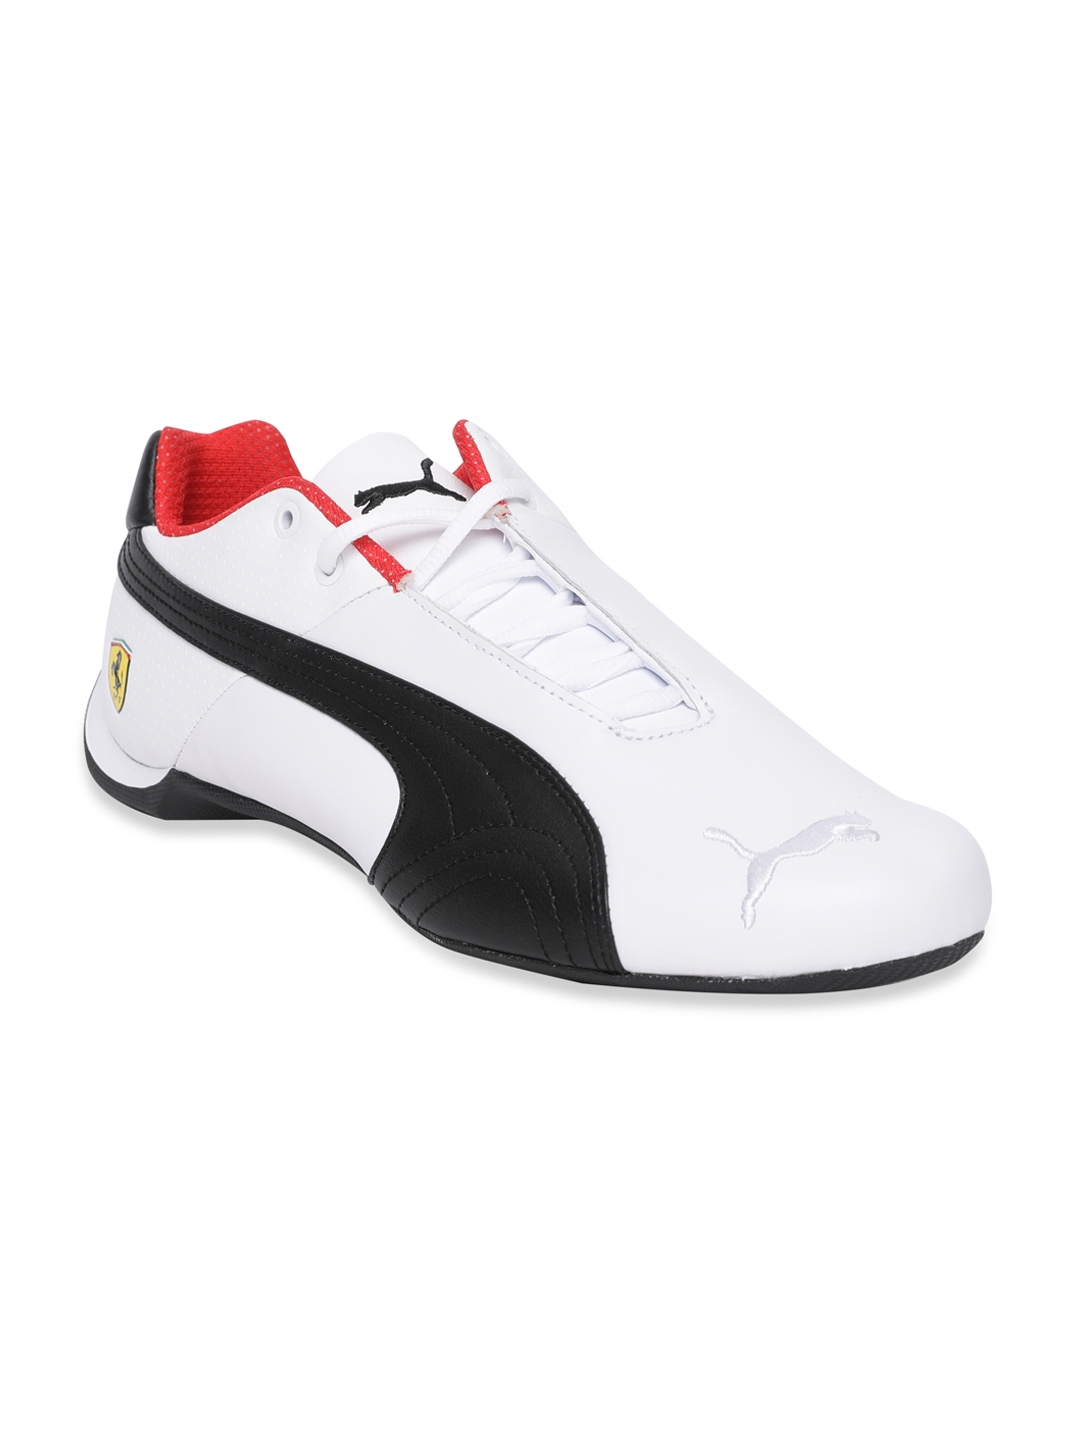 Buy PUMA Motorsport SF Future Cat OG Unisex White Leather Walking Shoes ...